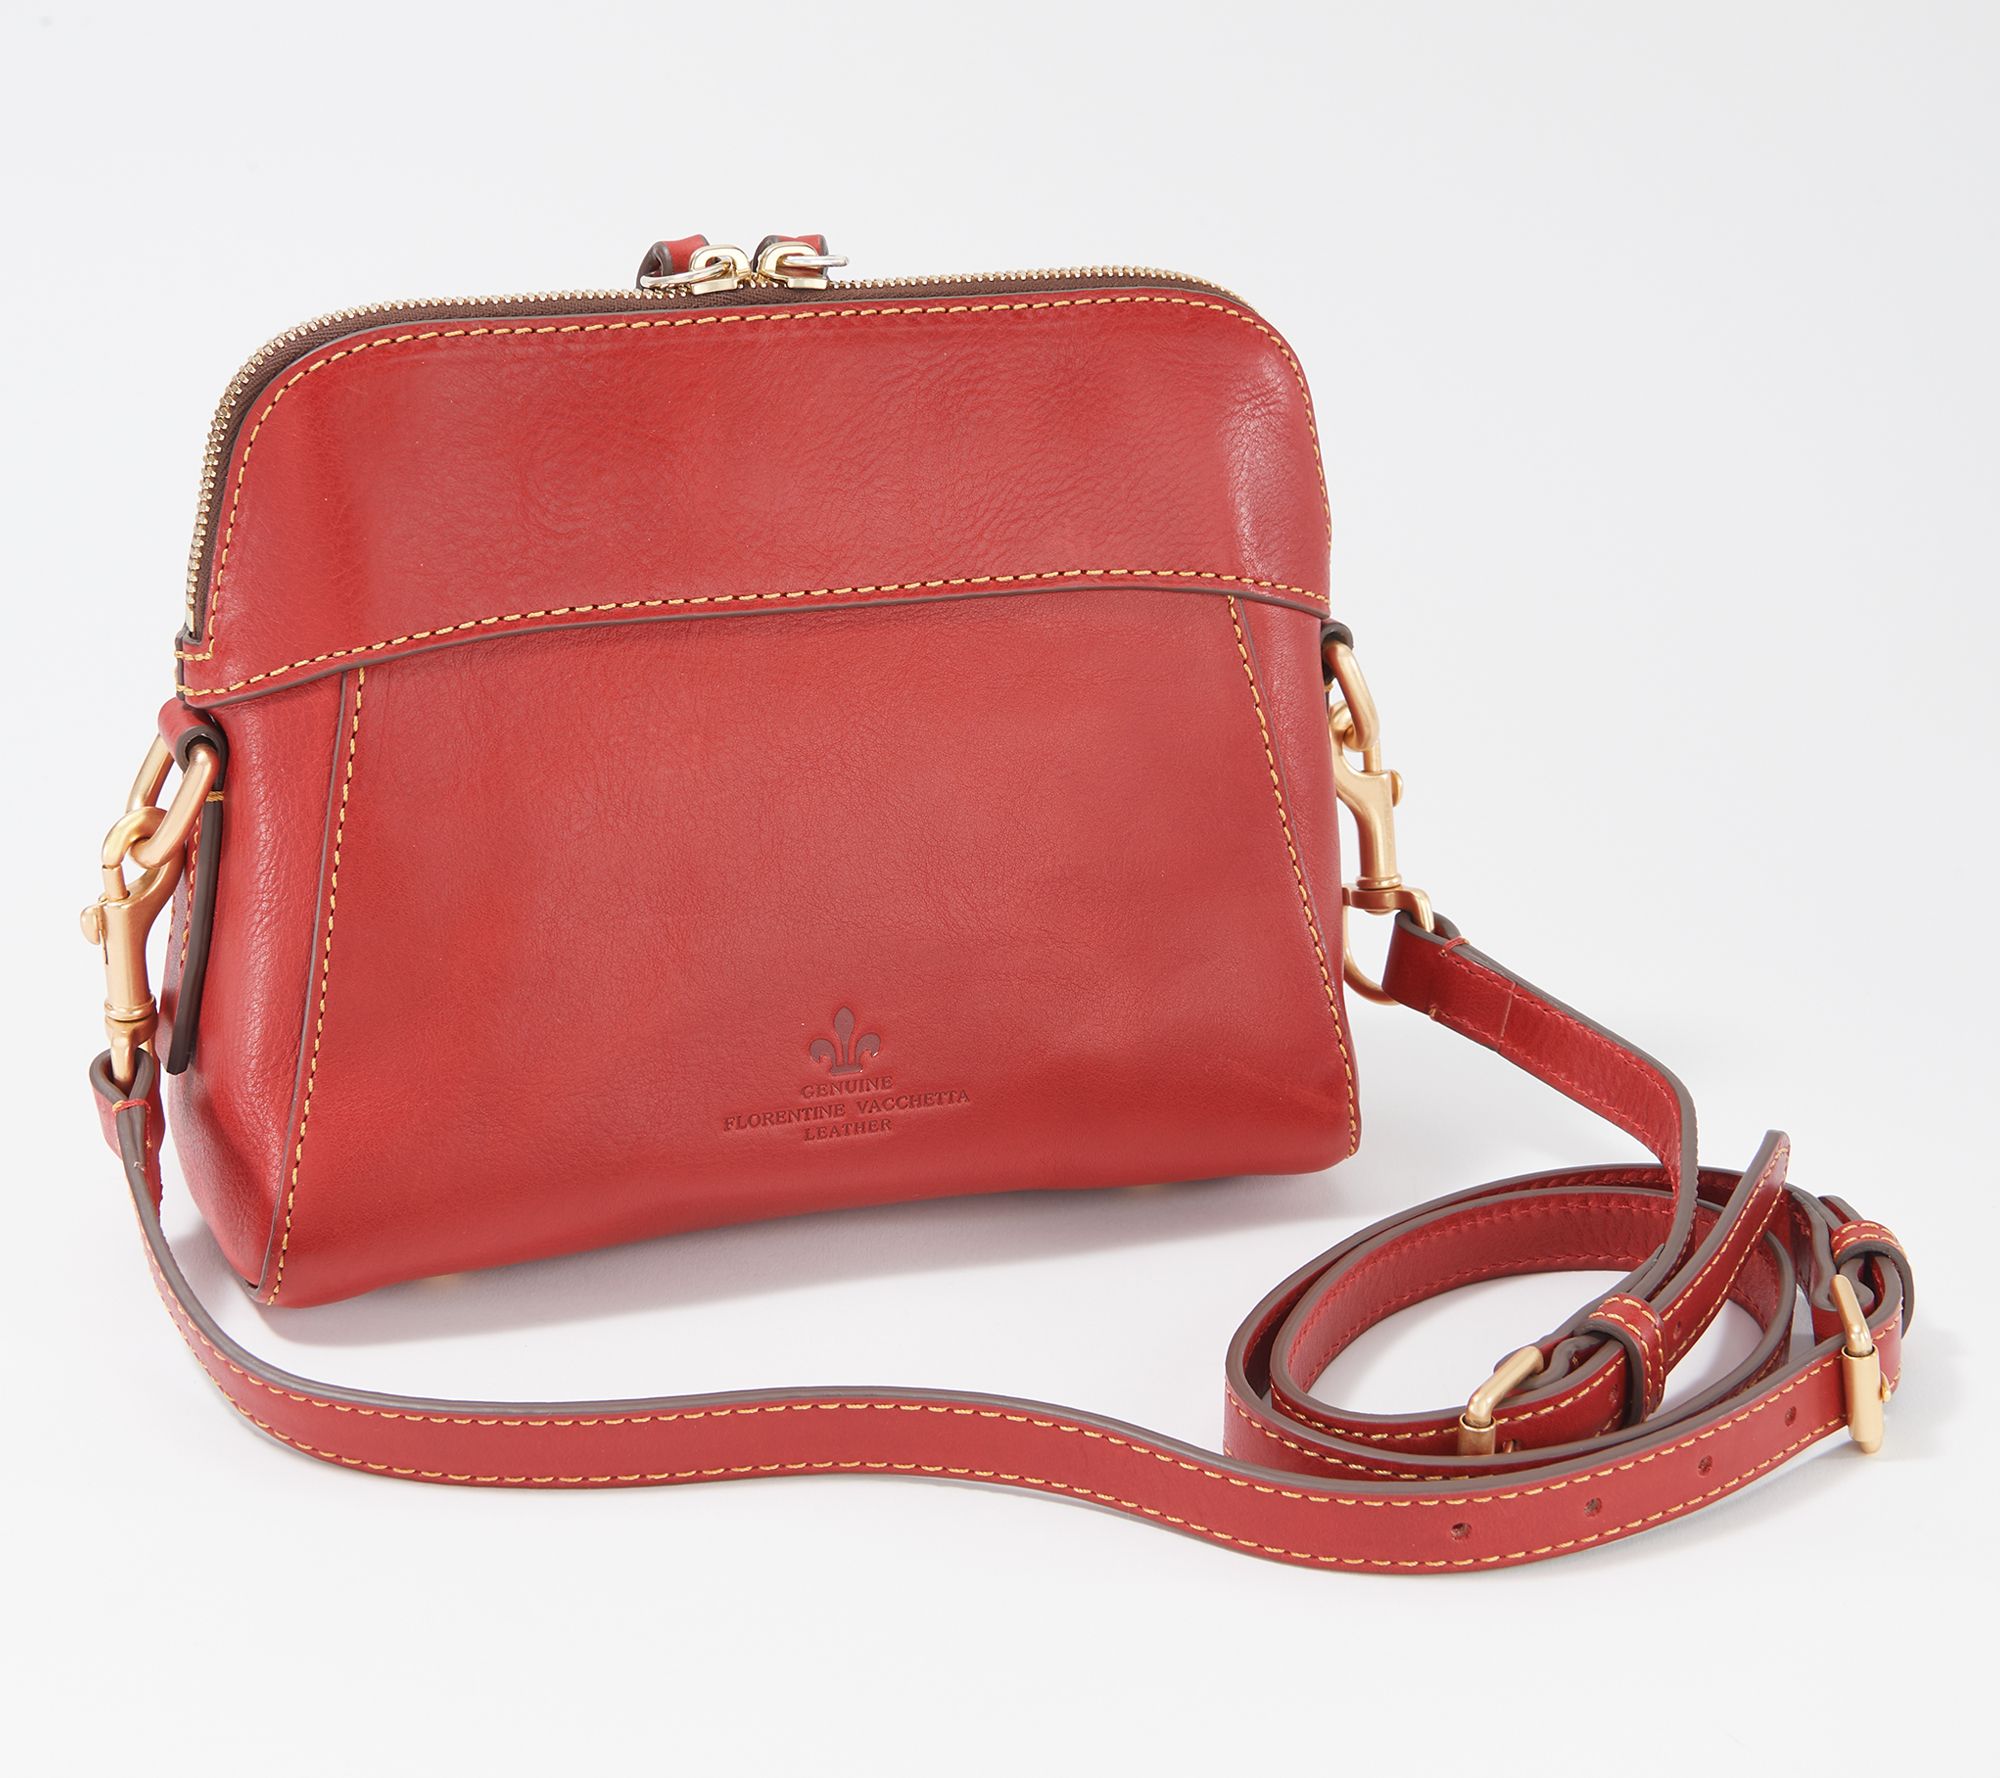 Dooney & Bourke Florentine Crossbody Handbag - Cameron on QVC